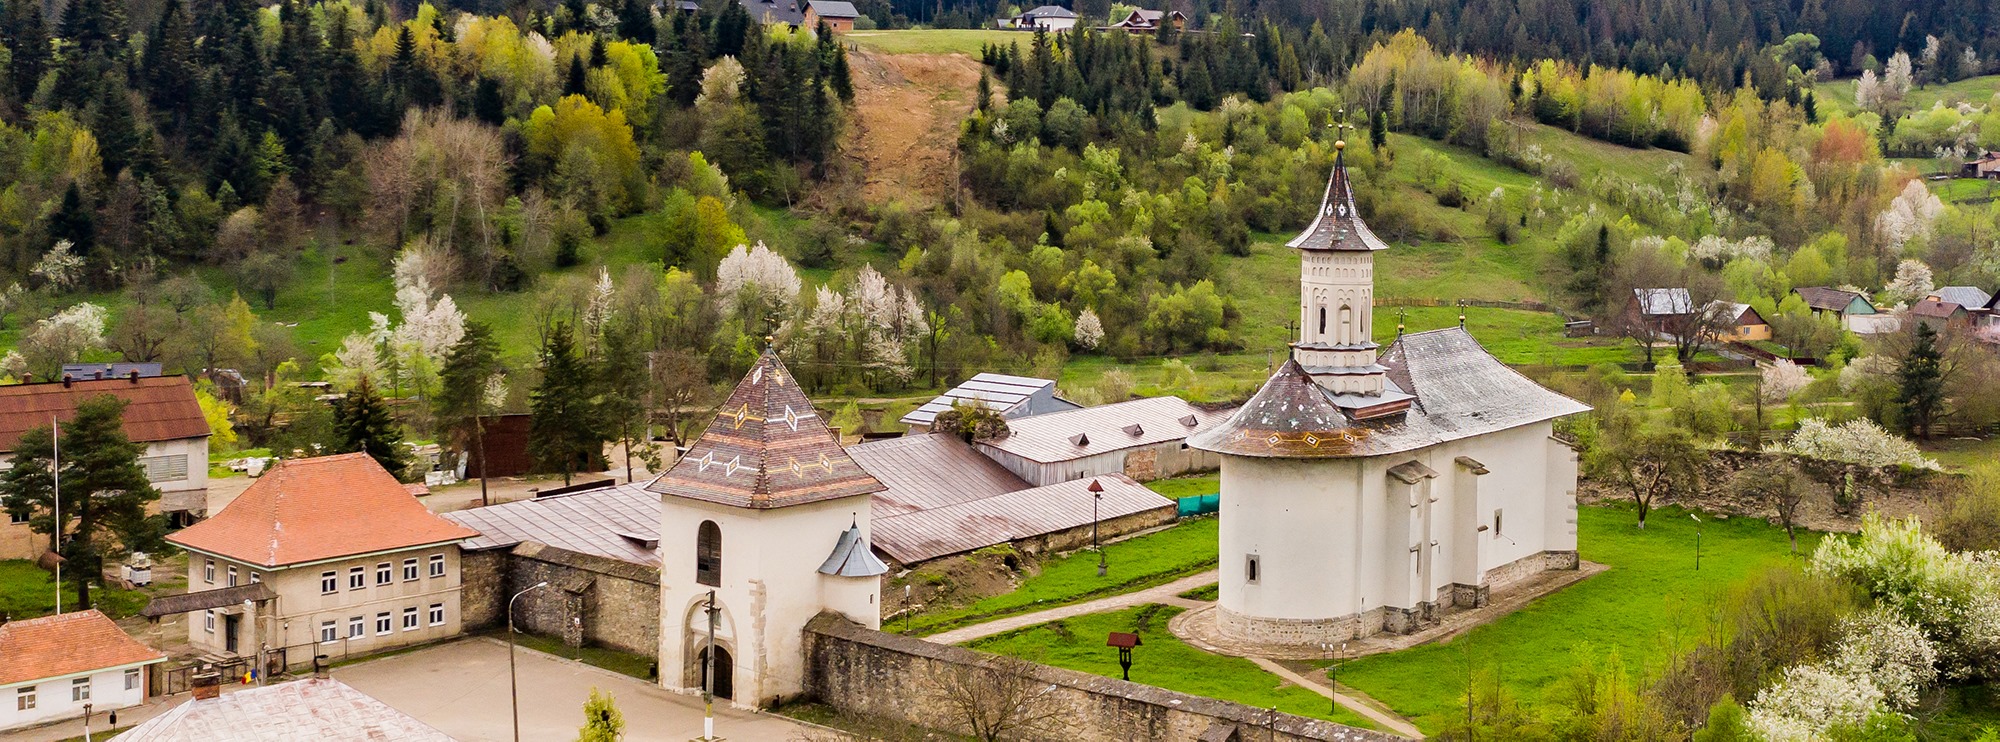 Solca-kolostor - Bukovina - észak-moldvai kolostorok